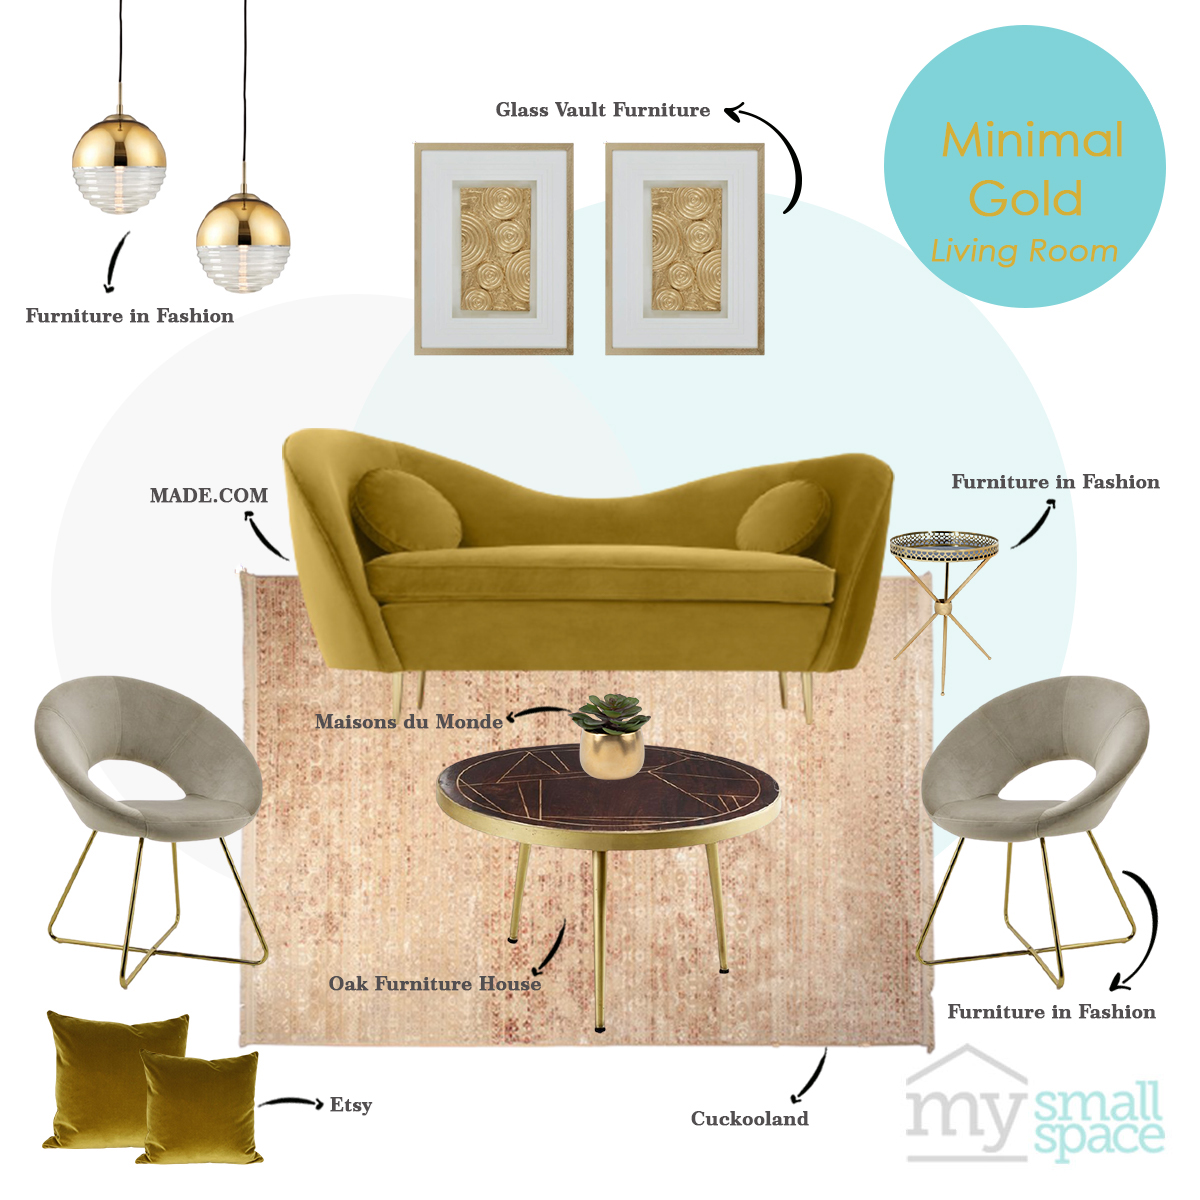 Minimal Gold living room Ideas